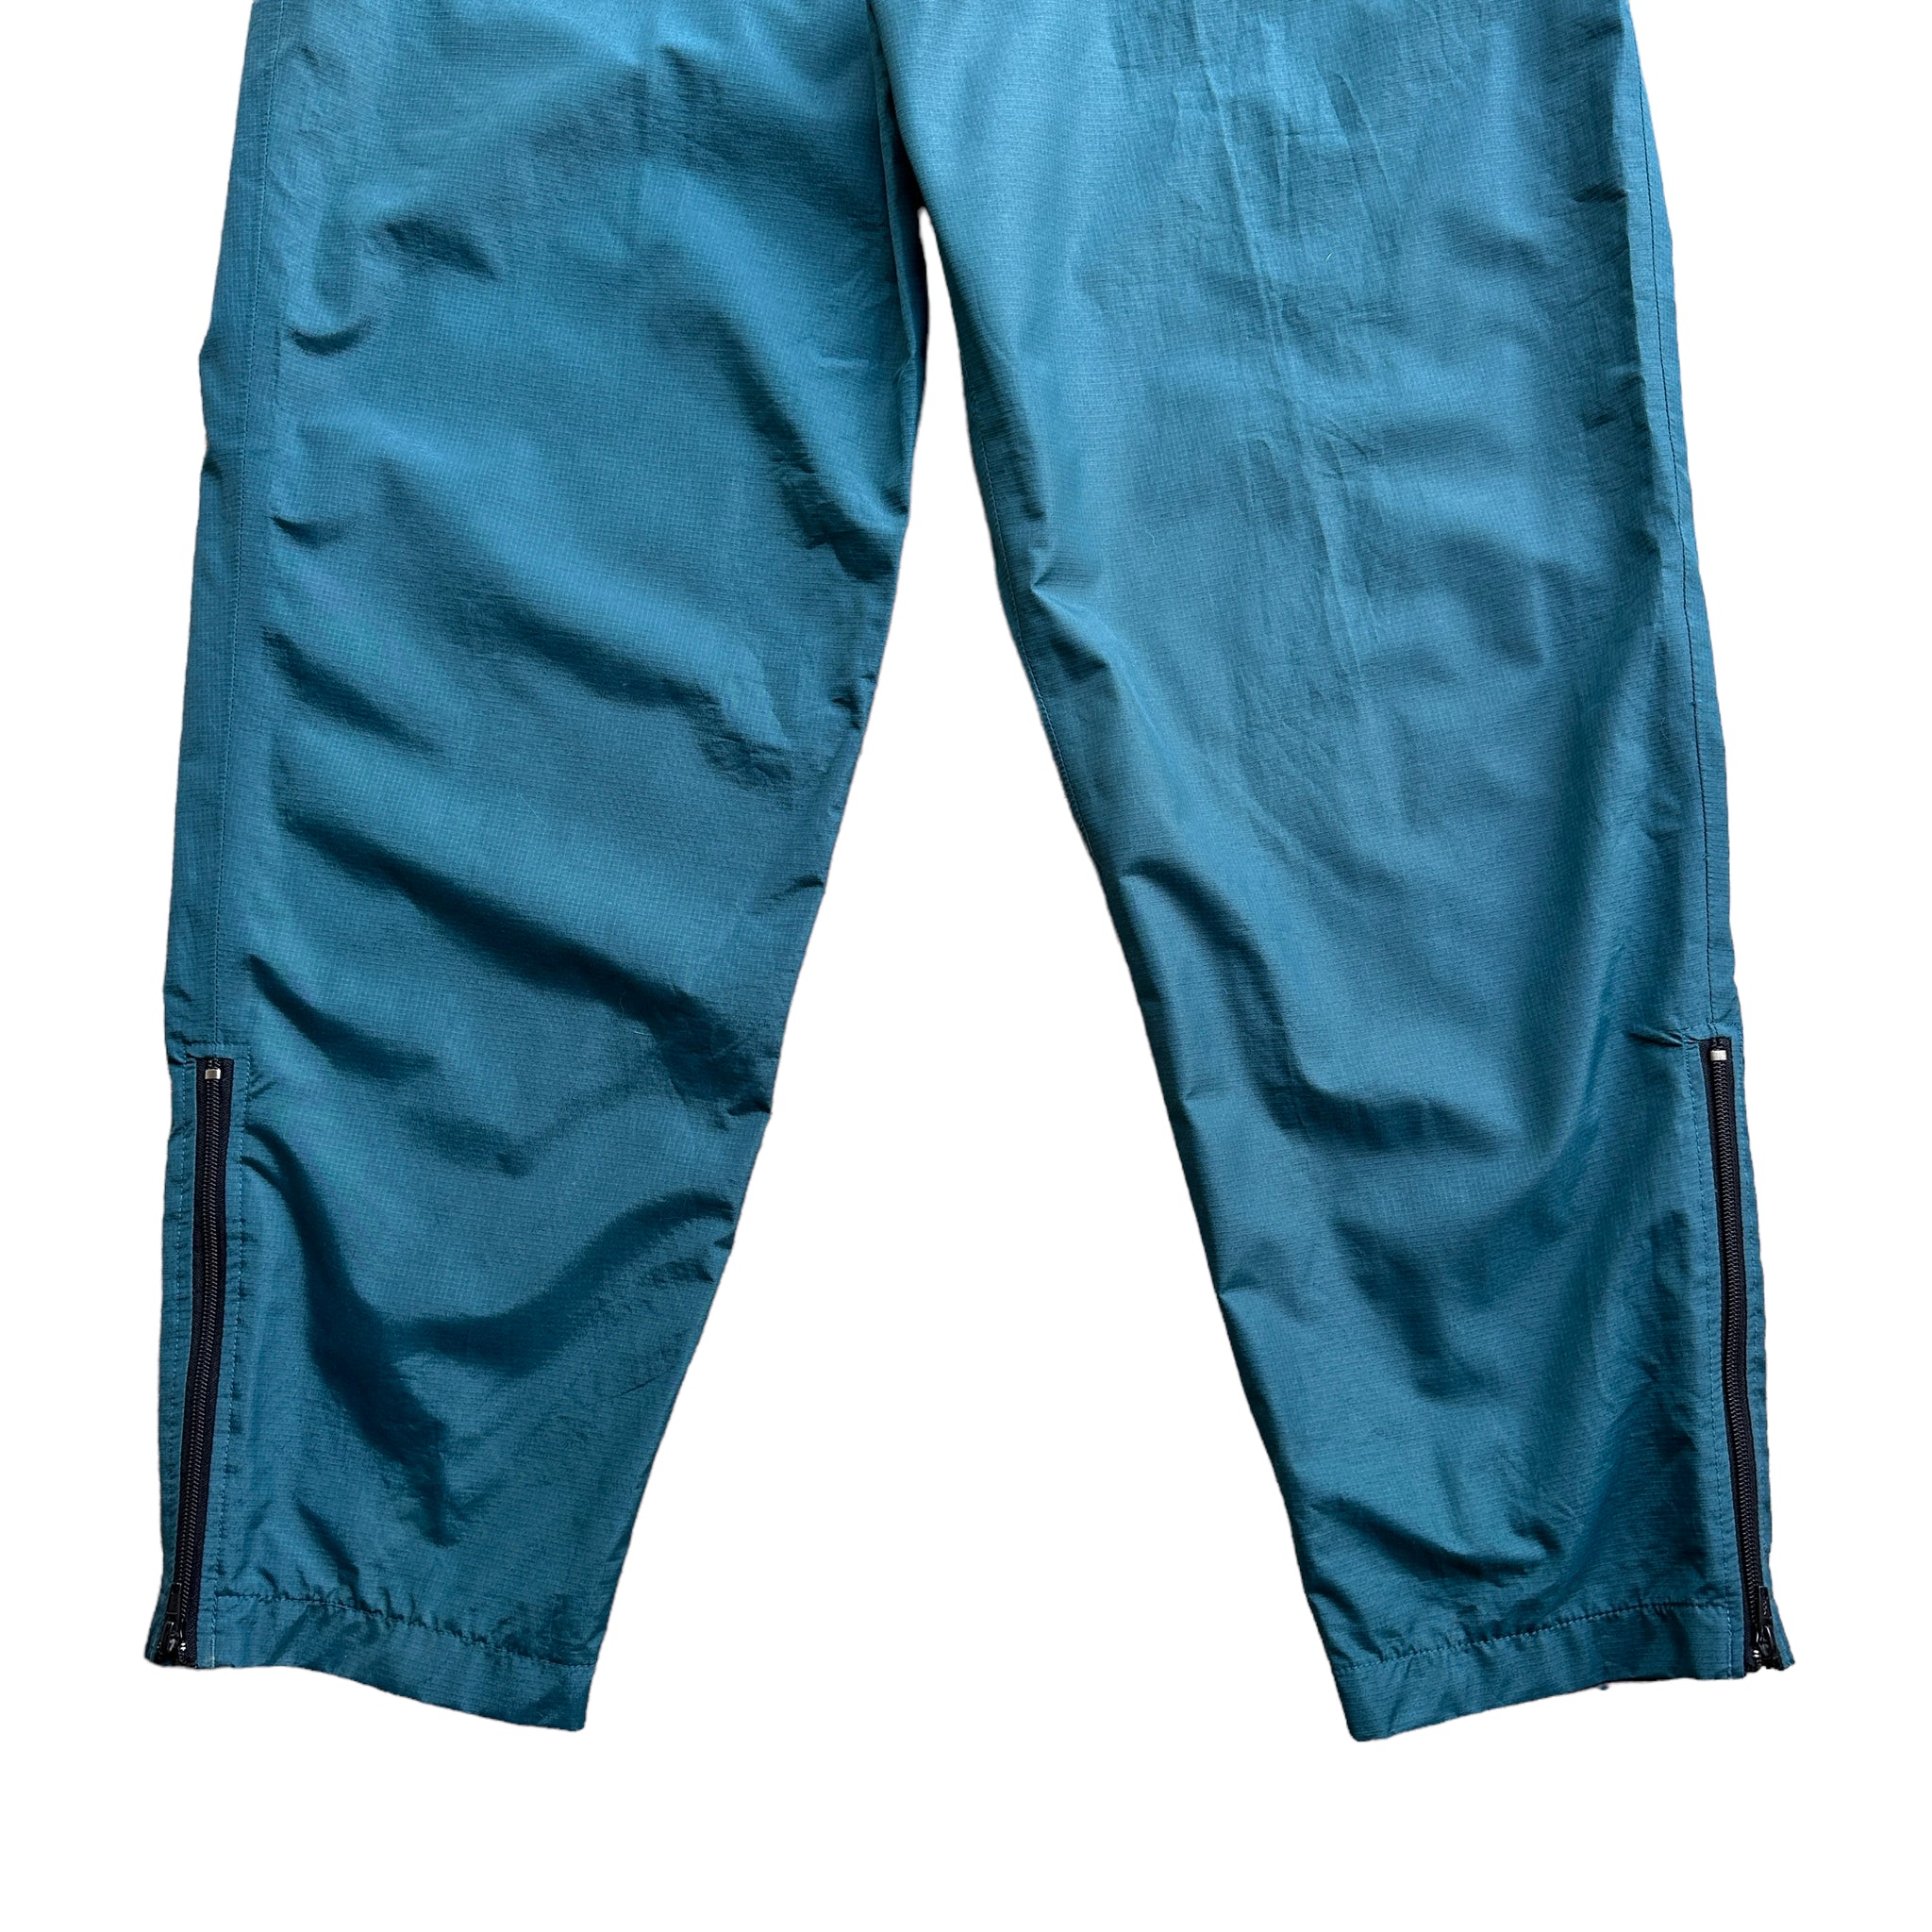 90s Sage fishing rain pants XL